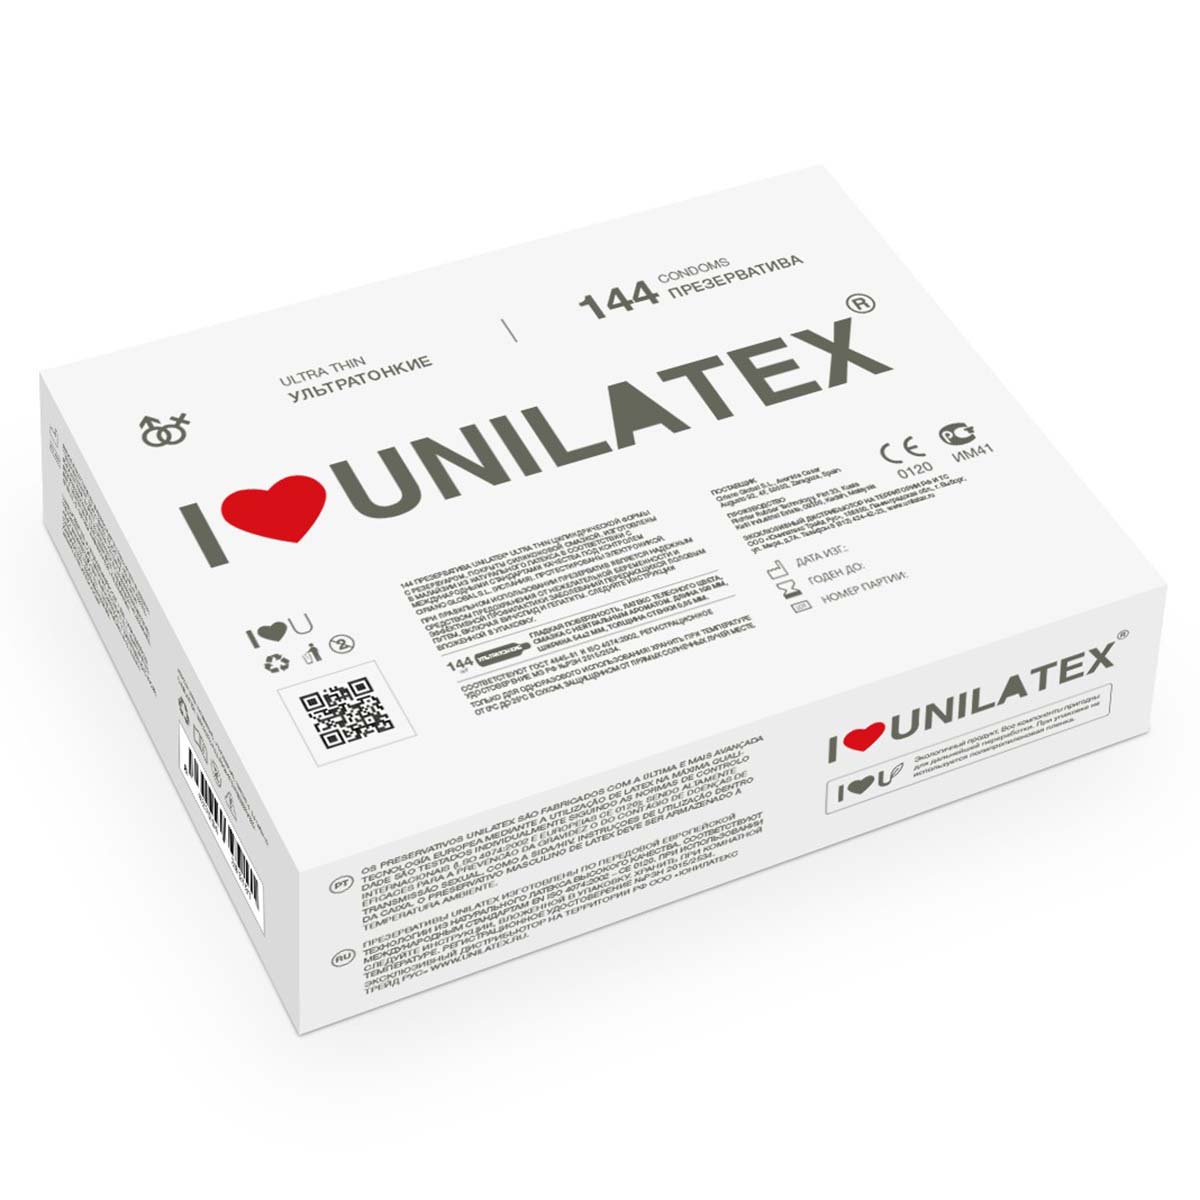 Ultra Thin, Презервативы Unilatex Ultrathin 144 шт.  - купить со скидкой